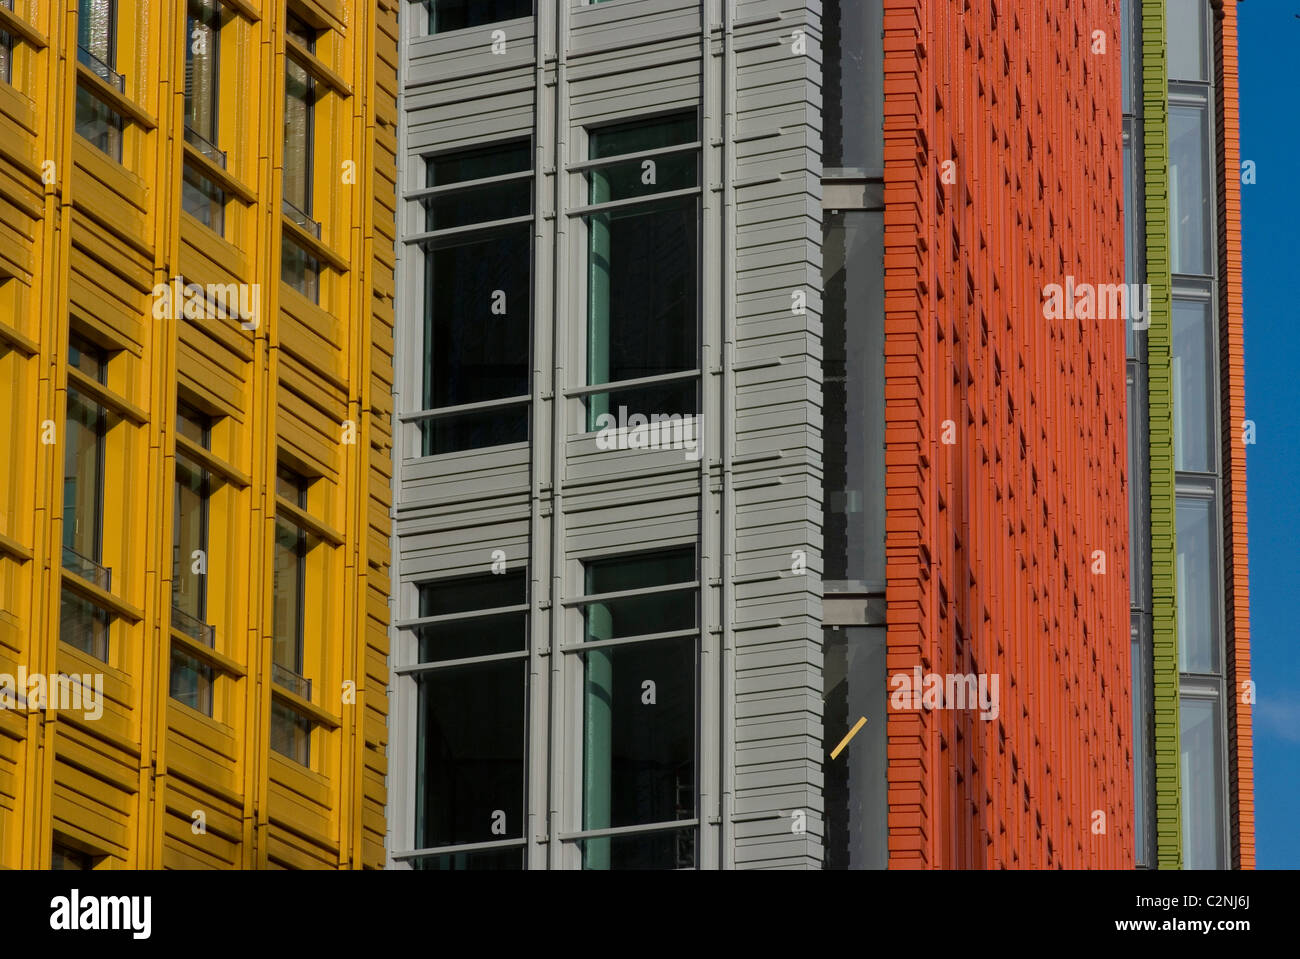 Central St Giles, colorido edificio nuevo desarrollo en St Giles Circus, Londres, WC2, Inglaterra Foto de stock